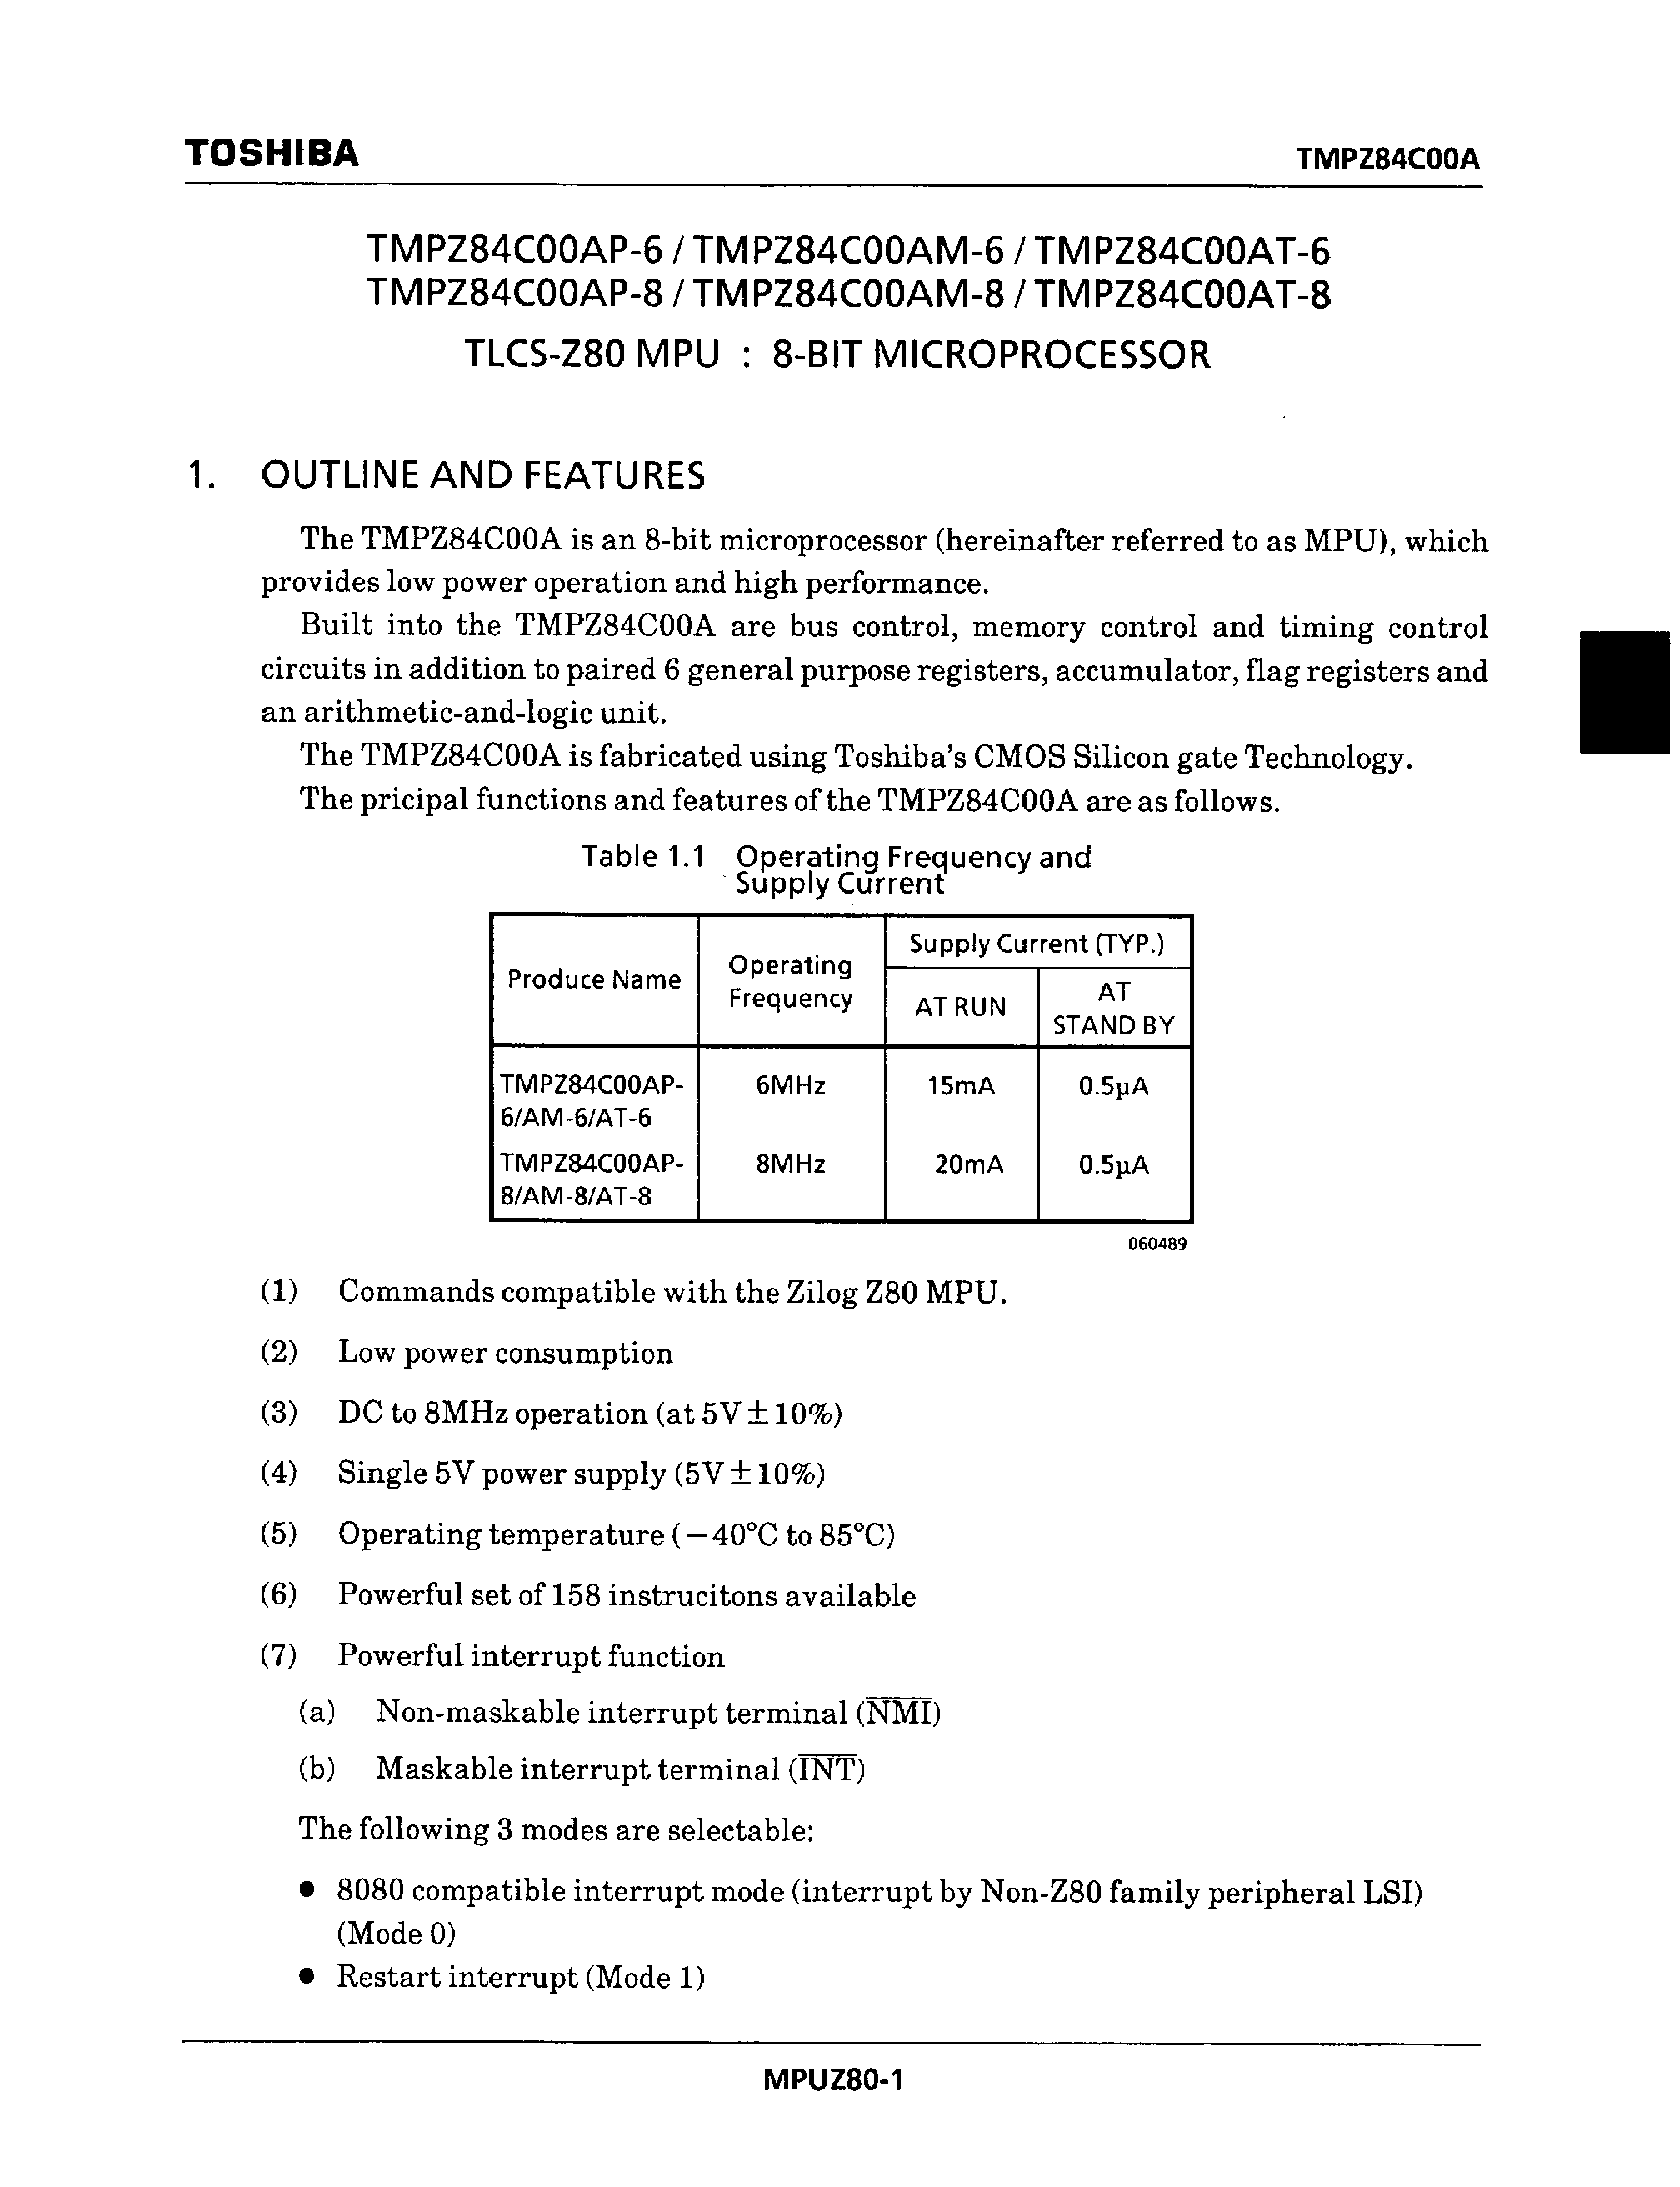 Datasheet TMPZ84C00AM-8 - TLCS-Z80 MPU : 8-BIT MICROPROCESSOR page 1